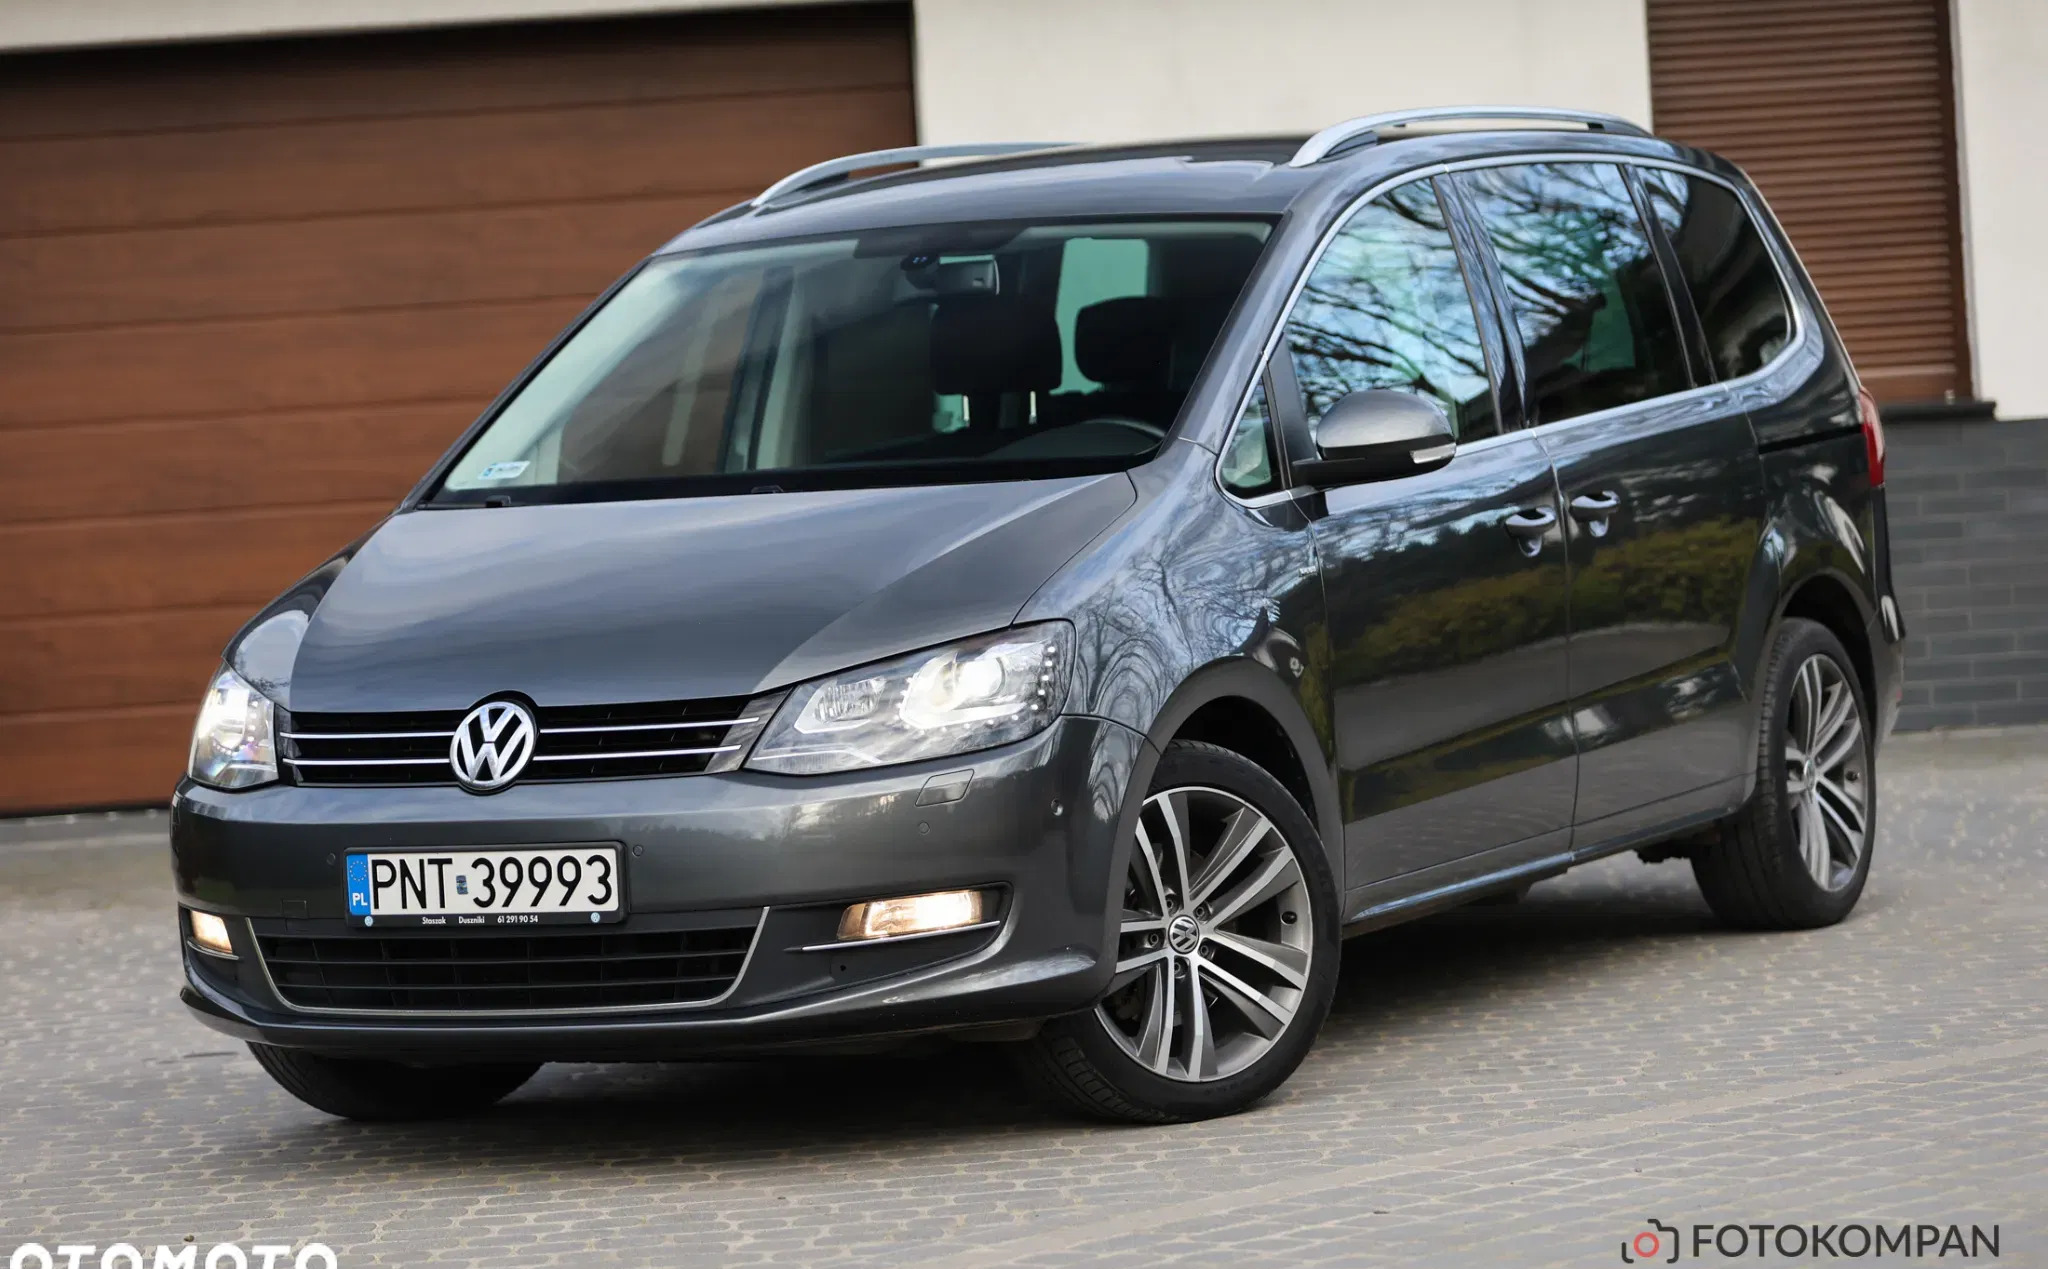 volkswagen Volkswagen Sharan cena 57500 przebieg: 262418, rok produkcji 2014 z Jaworzno